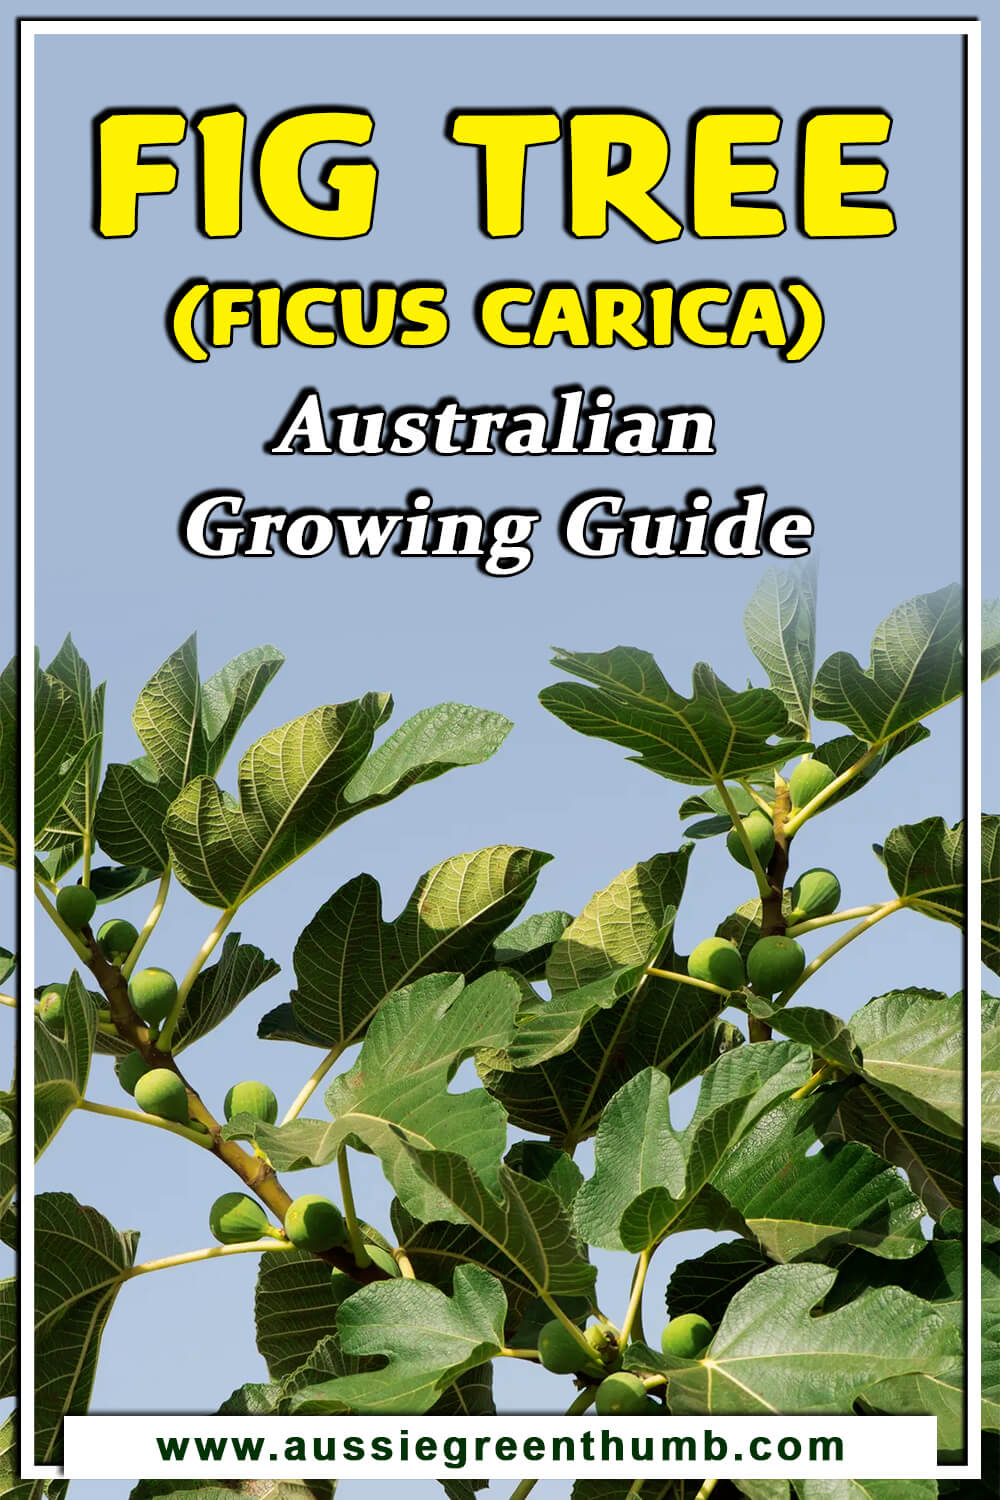 Fig tree (Ficus Carica) Australian Growing Guide